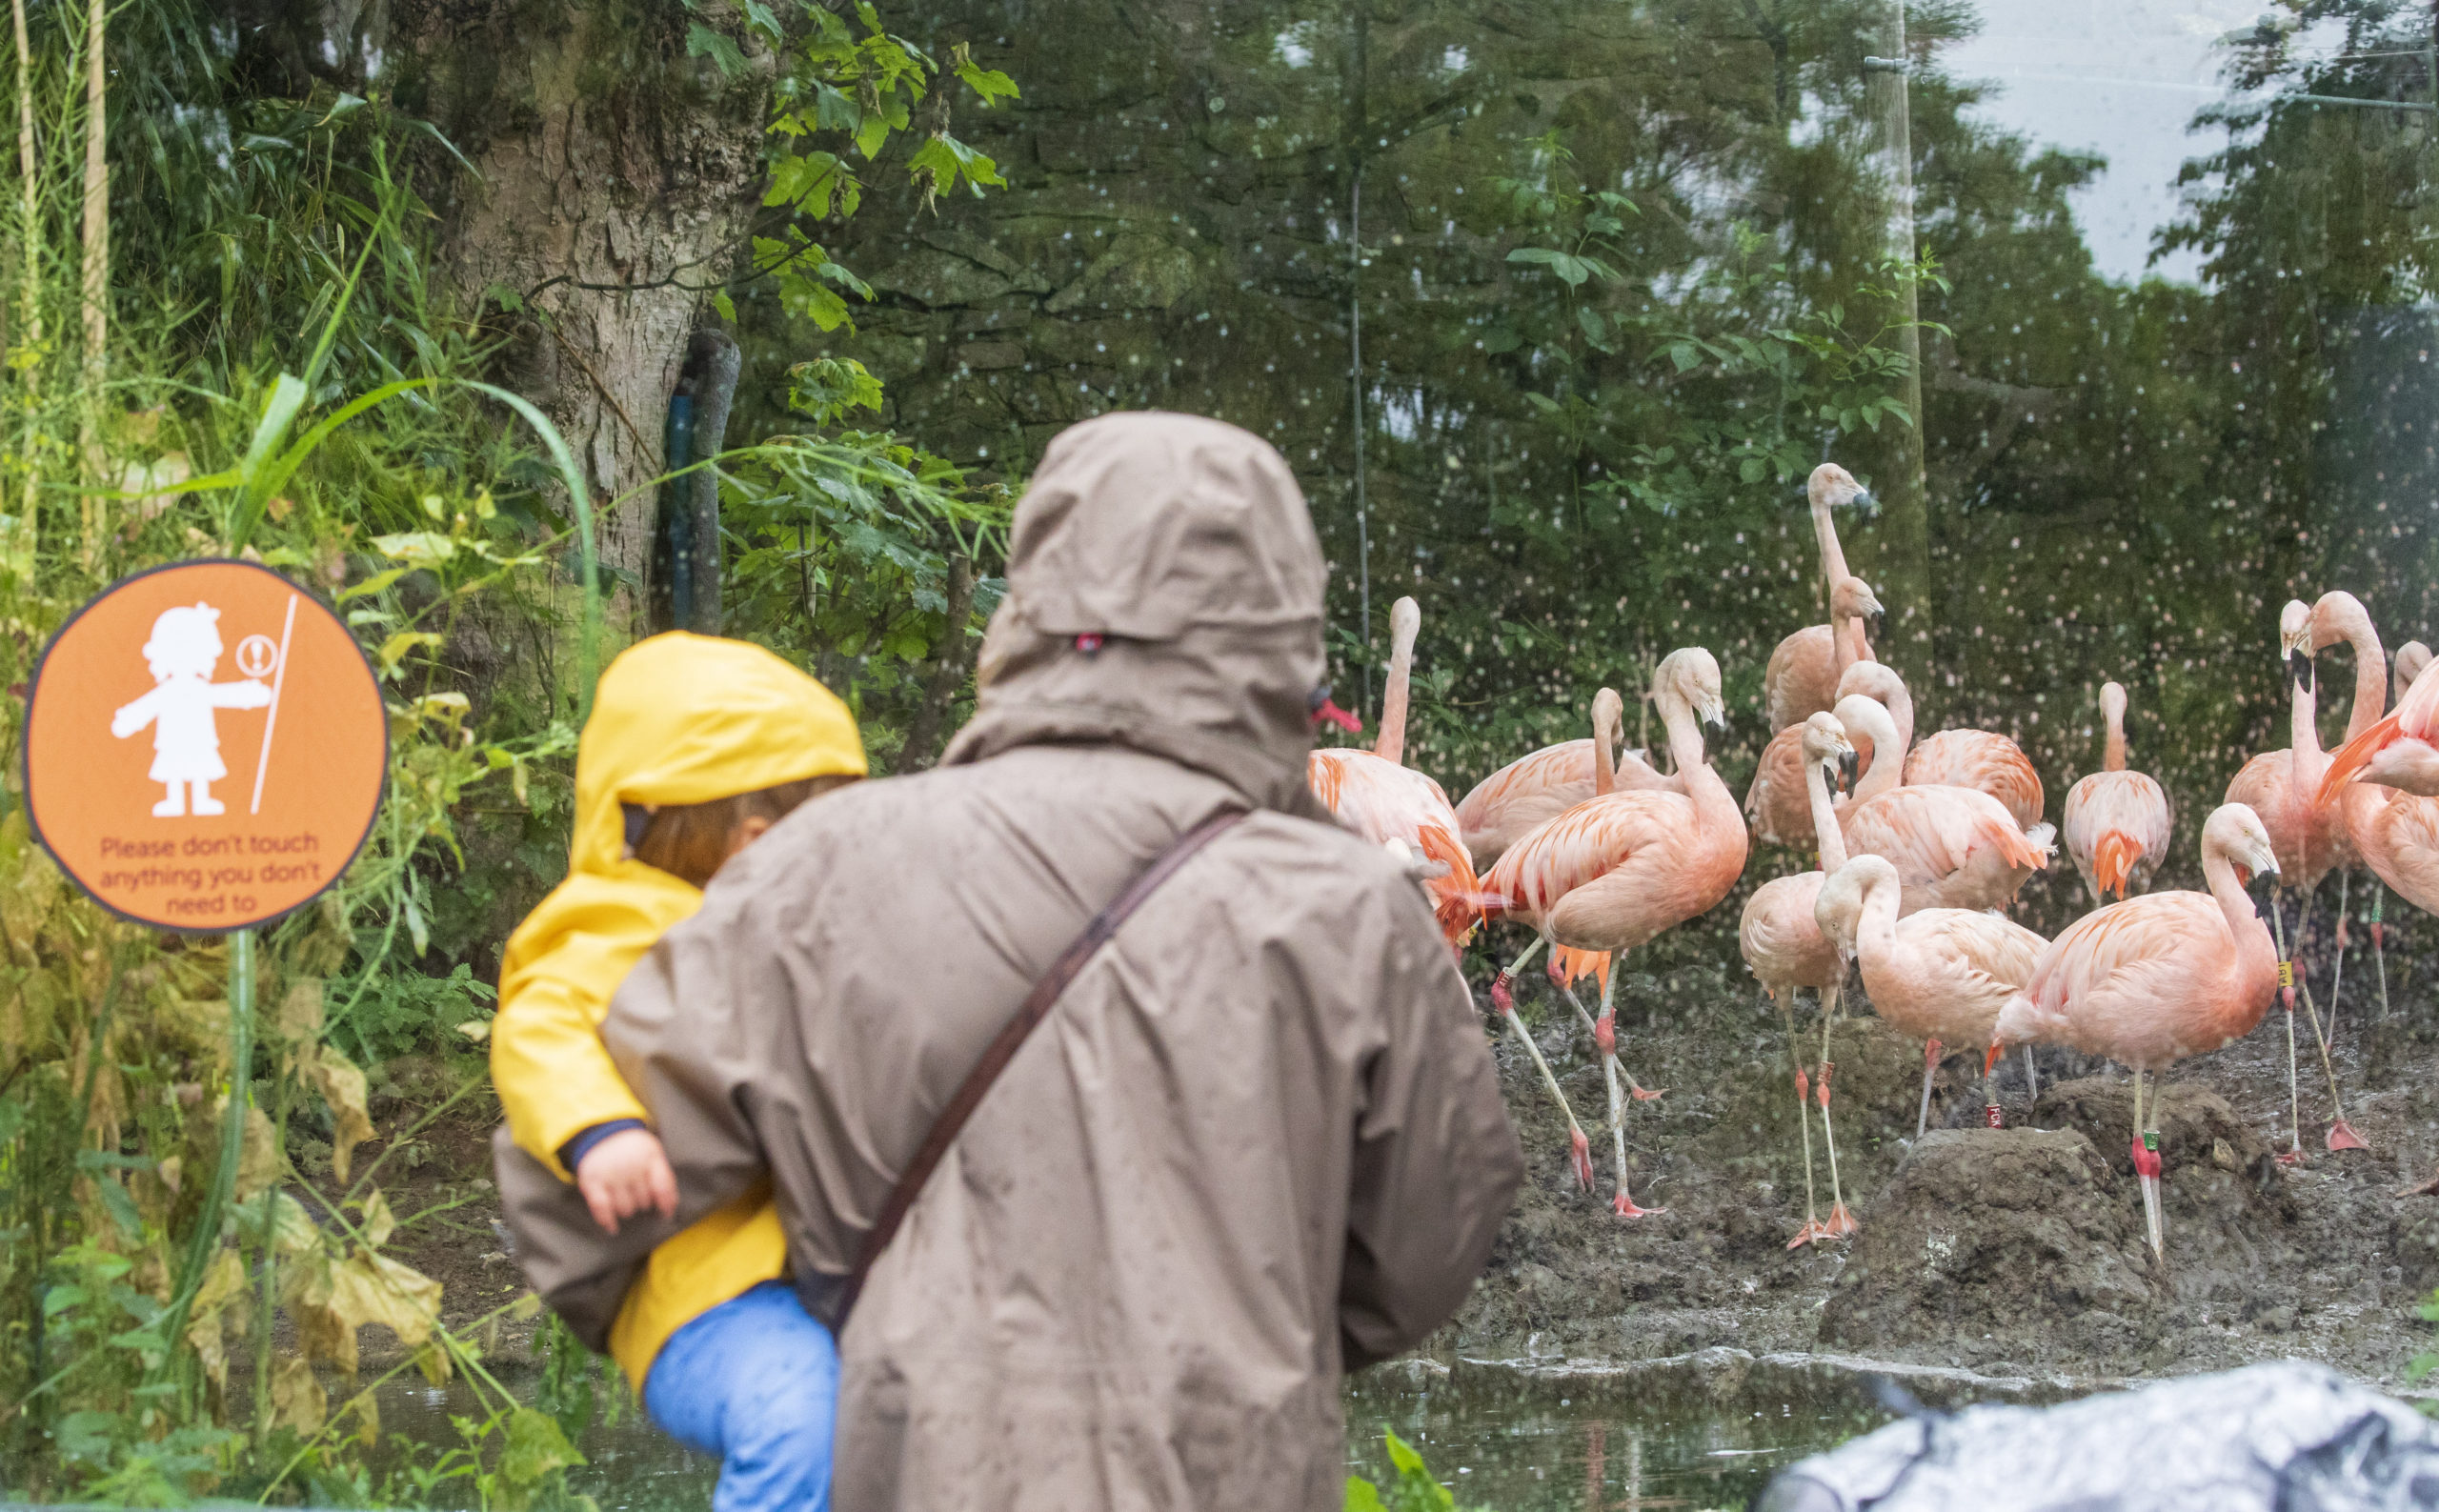 Flamingos on display at Edinburgh Zoo.